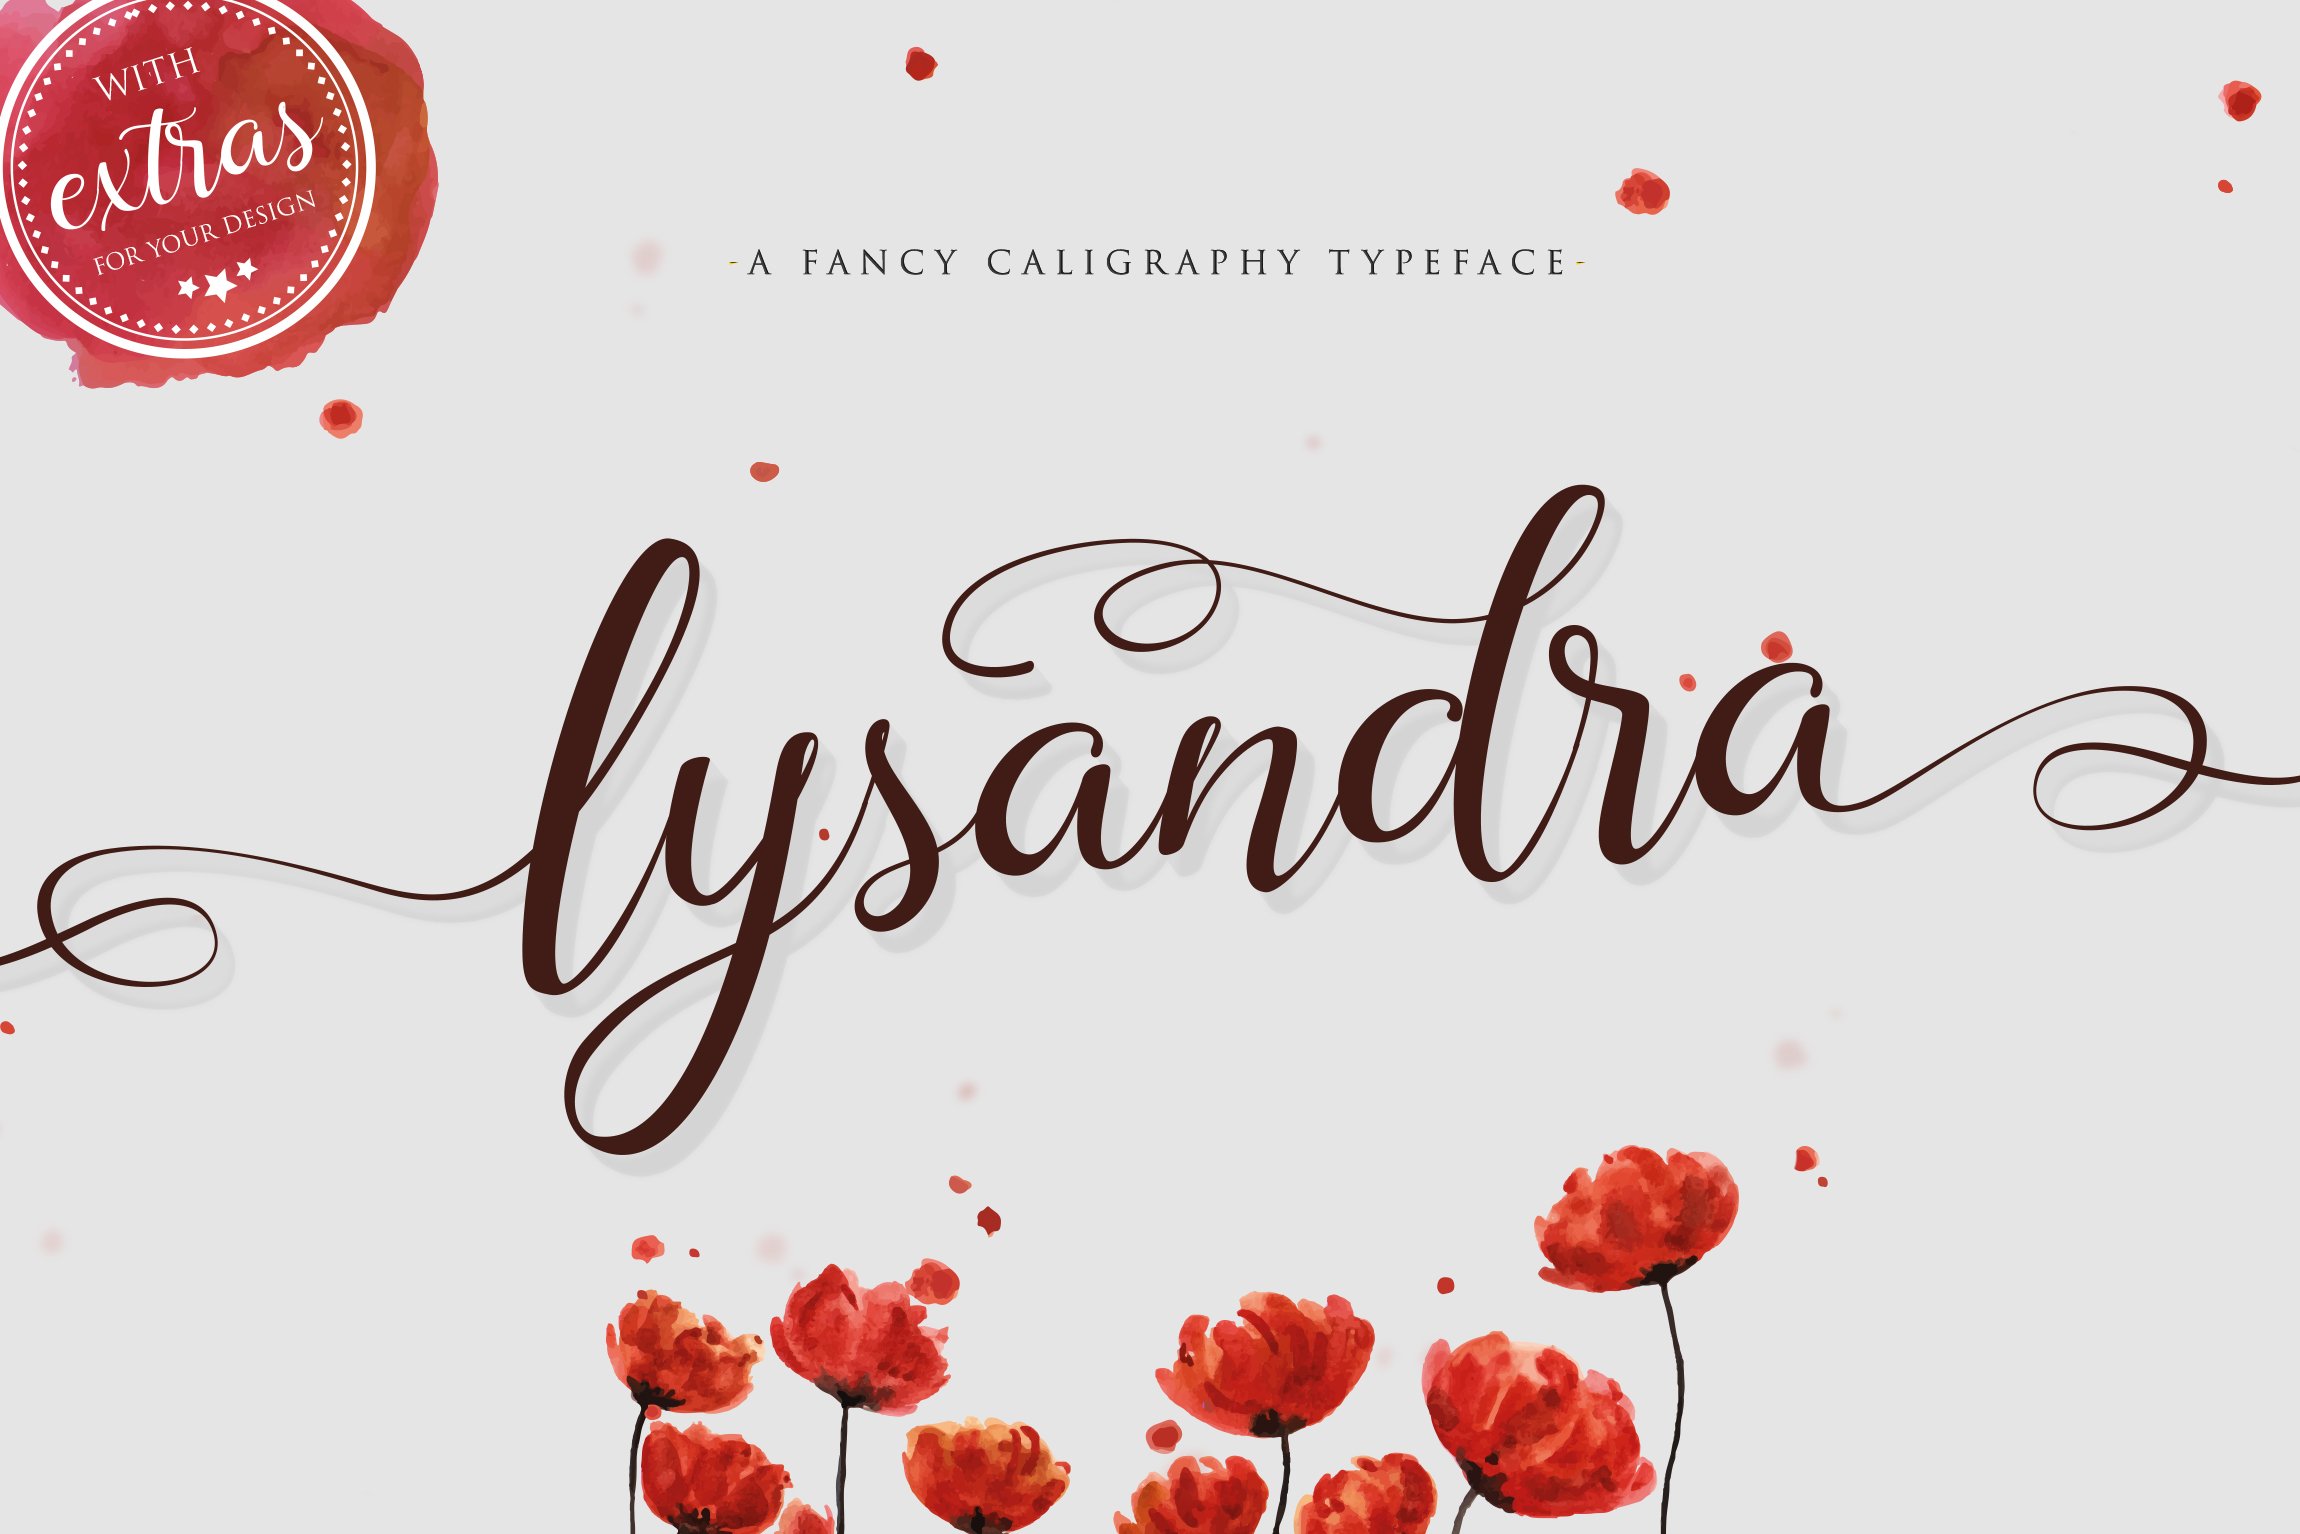 Lysandra Beauty Font cover image.